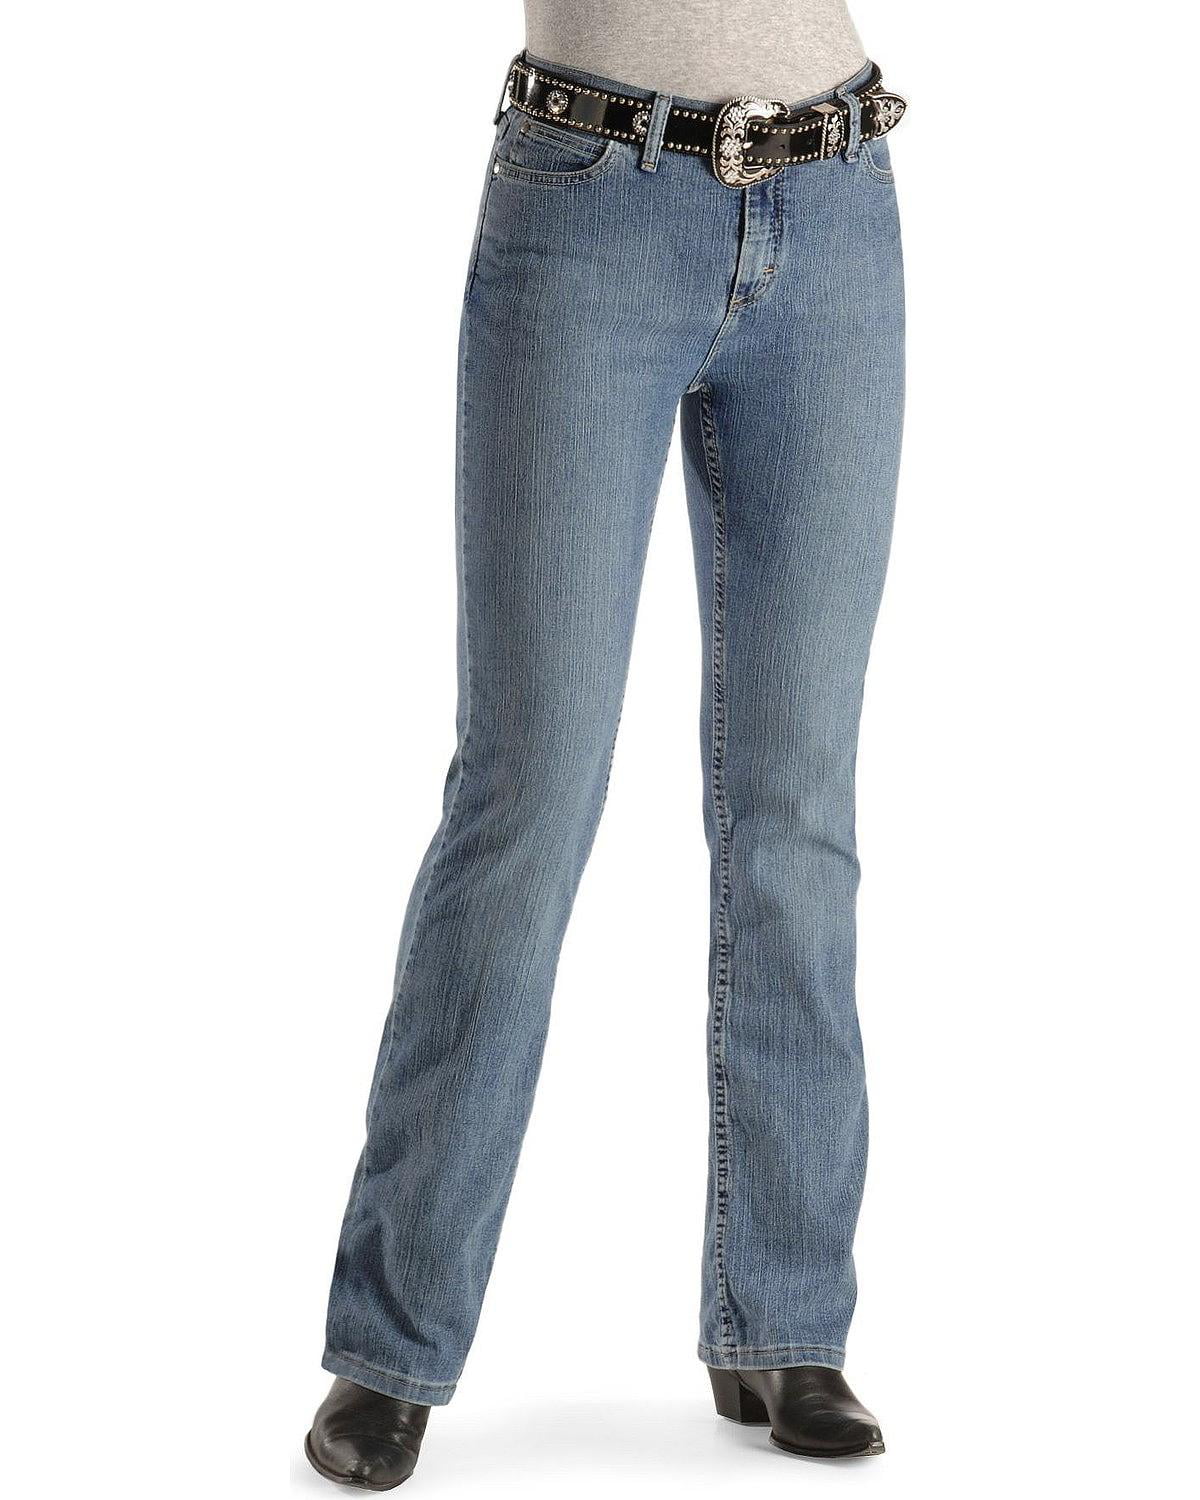 wrangler women's jeans tractor supply